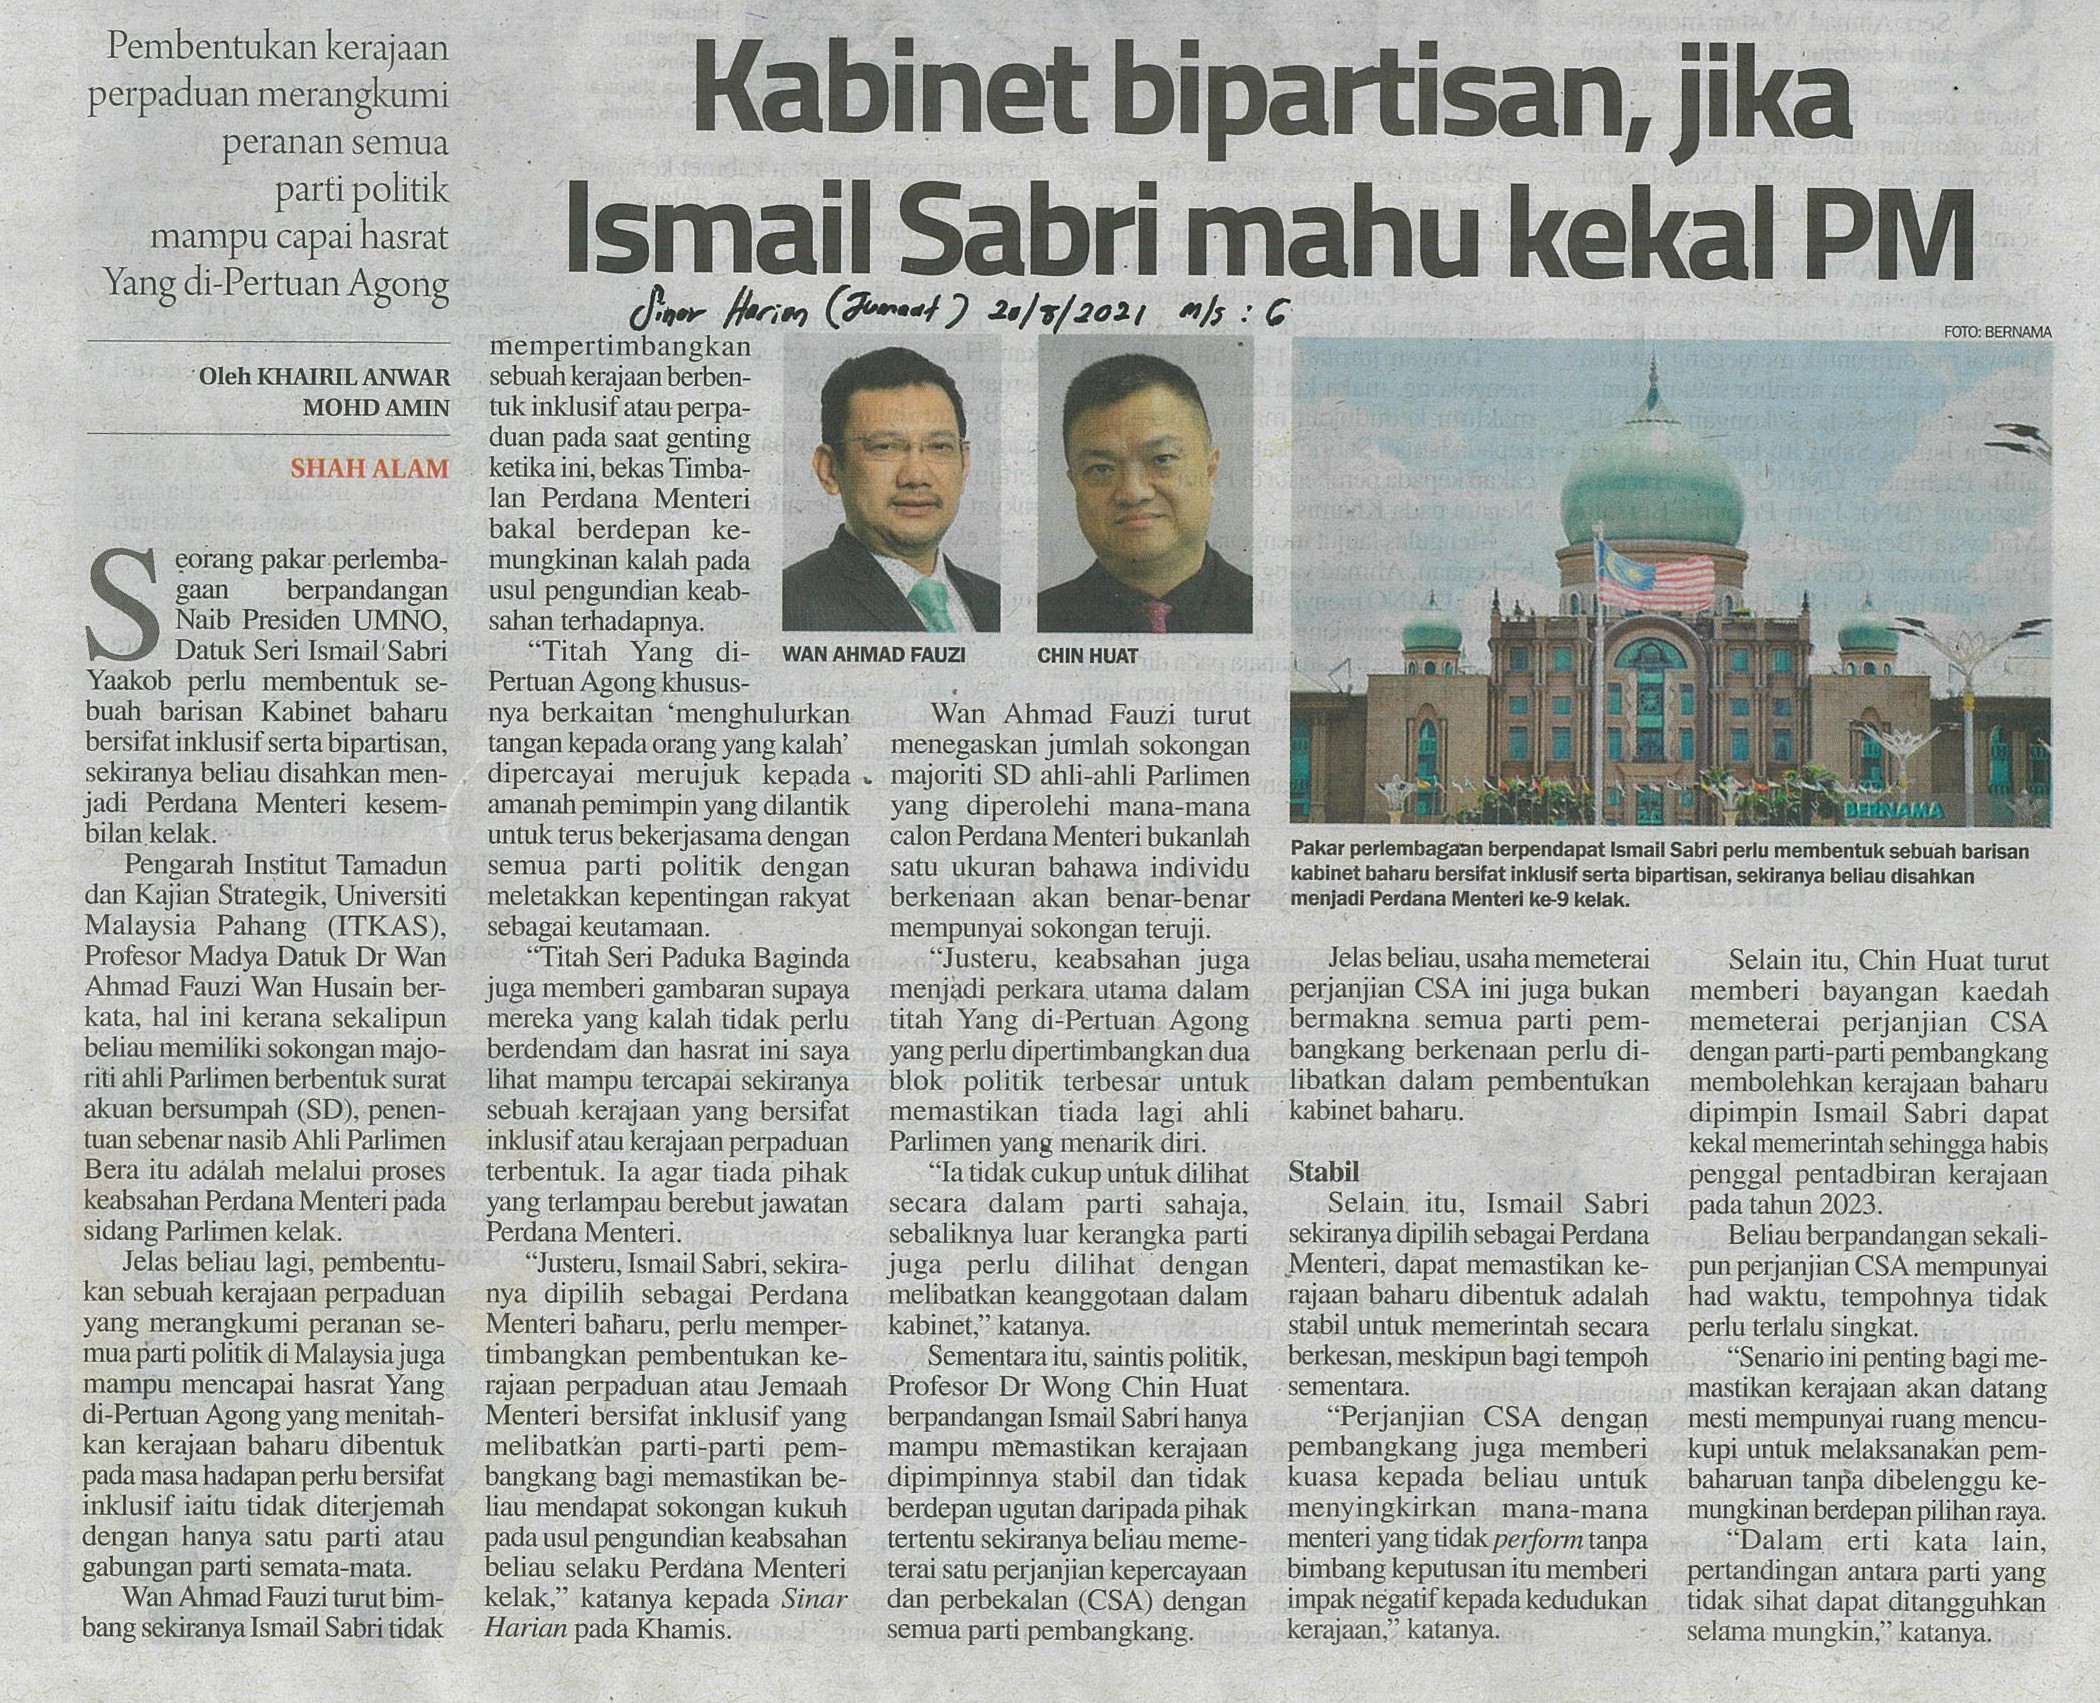 Kabinet bipartisan, jika Ismail Sabri mahu kekal PM